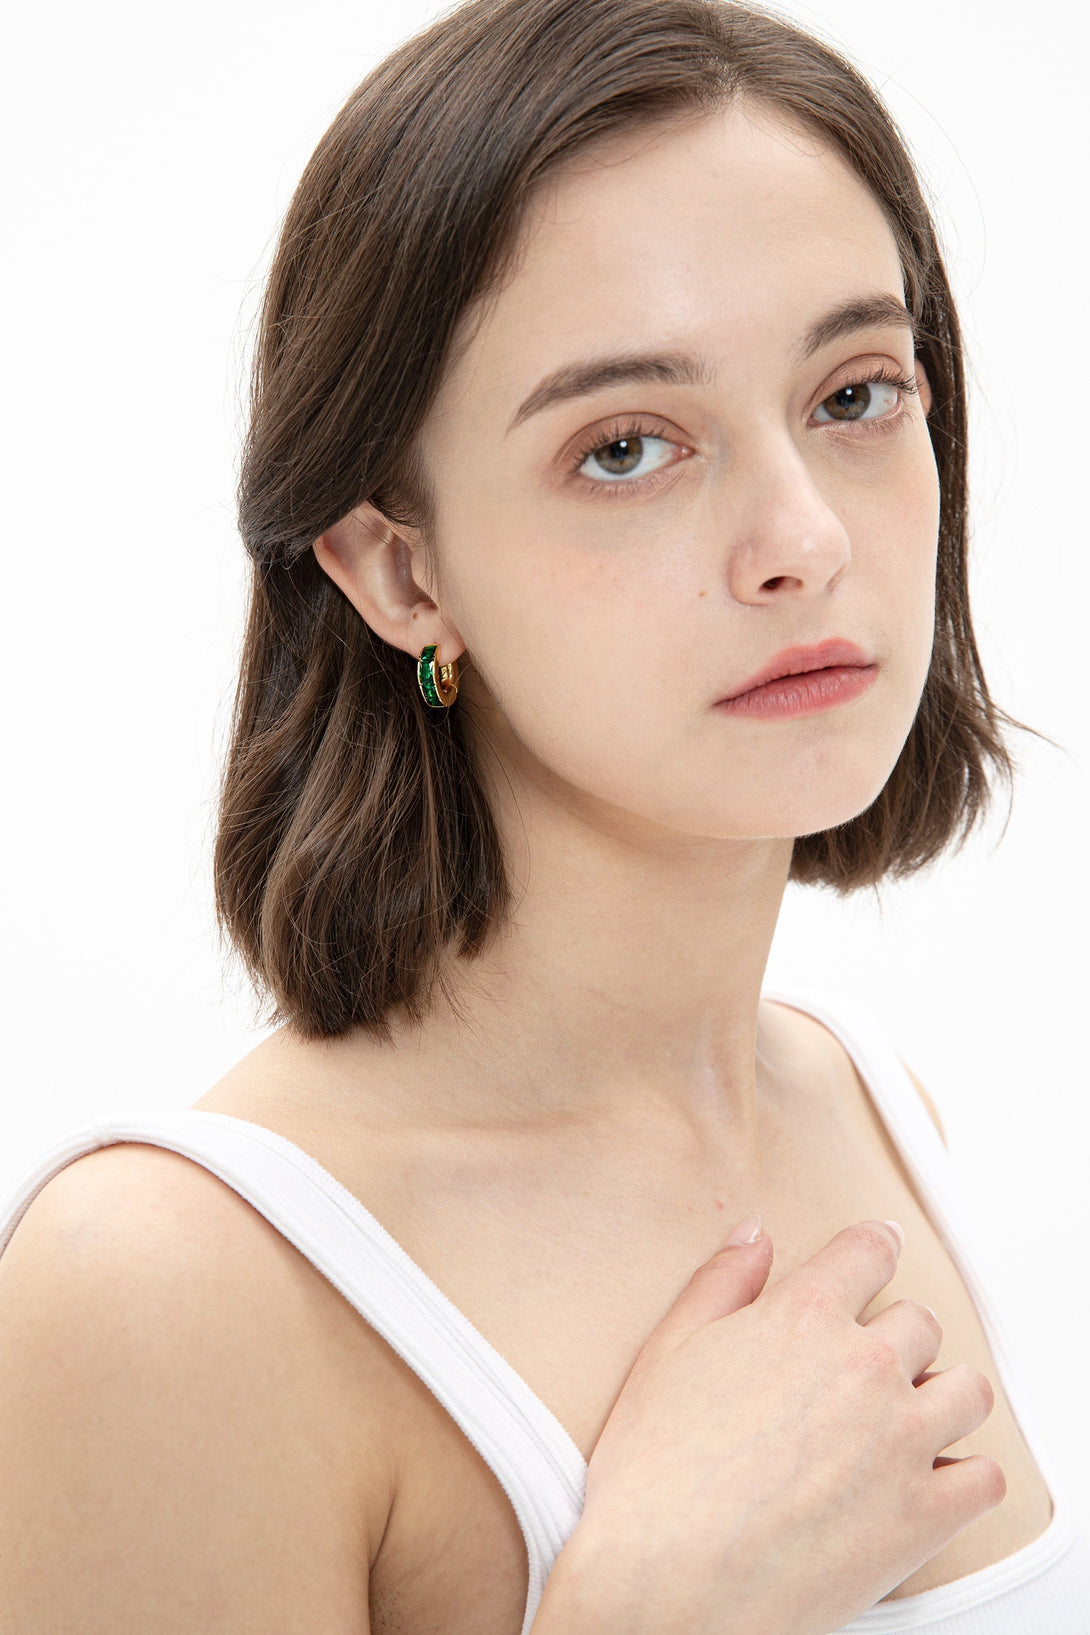 Gold Square-Cut Emerald Huggie Earrings - Classicharms